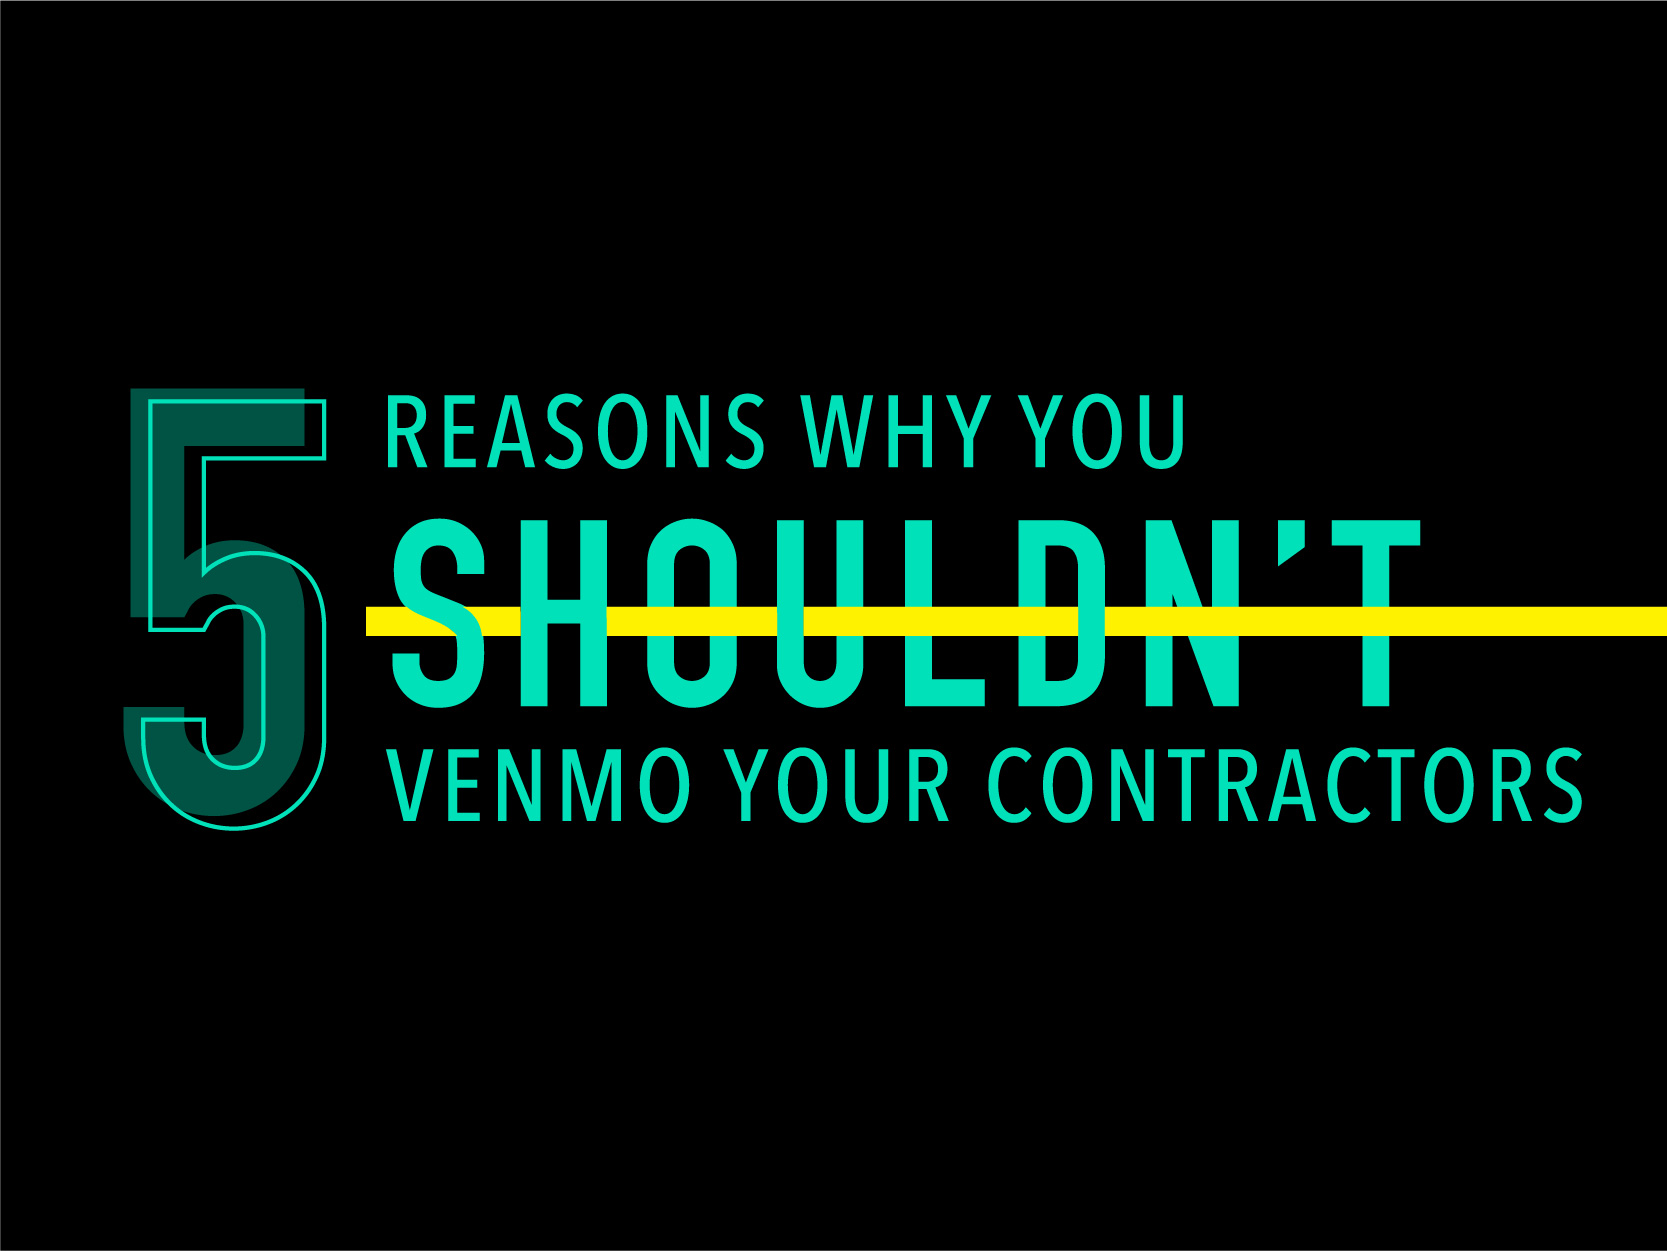 5 Reasons Why You Shouldn't Venmo Your Contractors